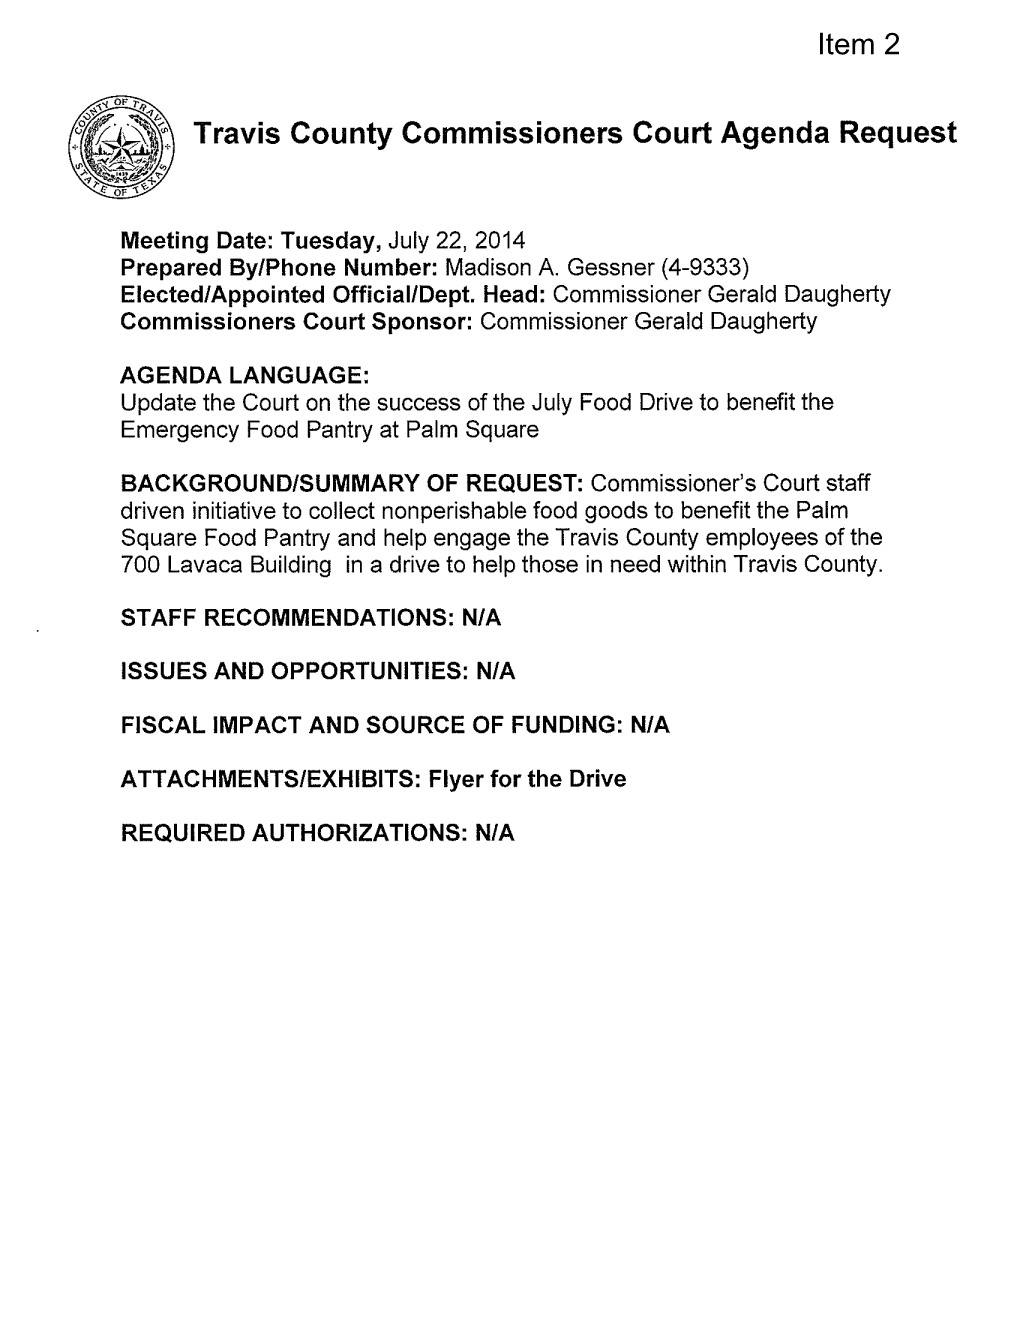 Travis County Commissioners Court Agenda Request